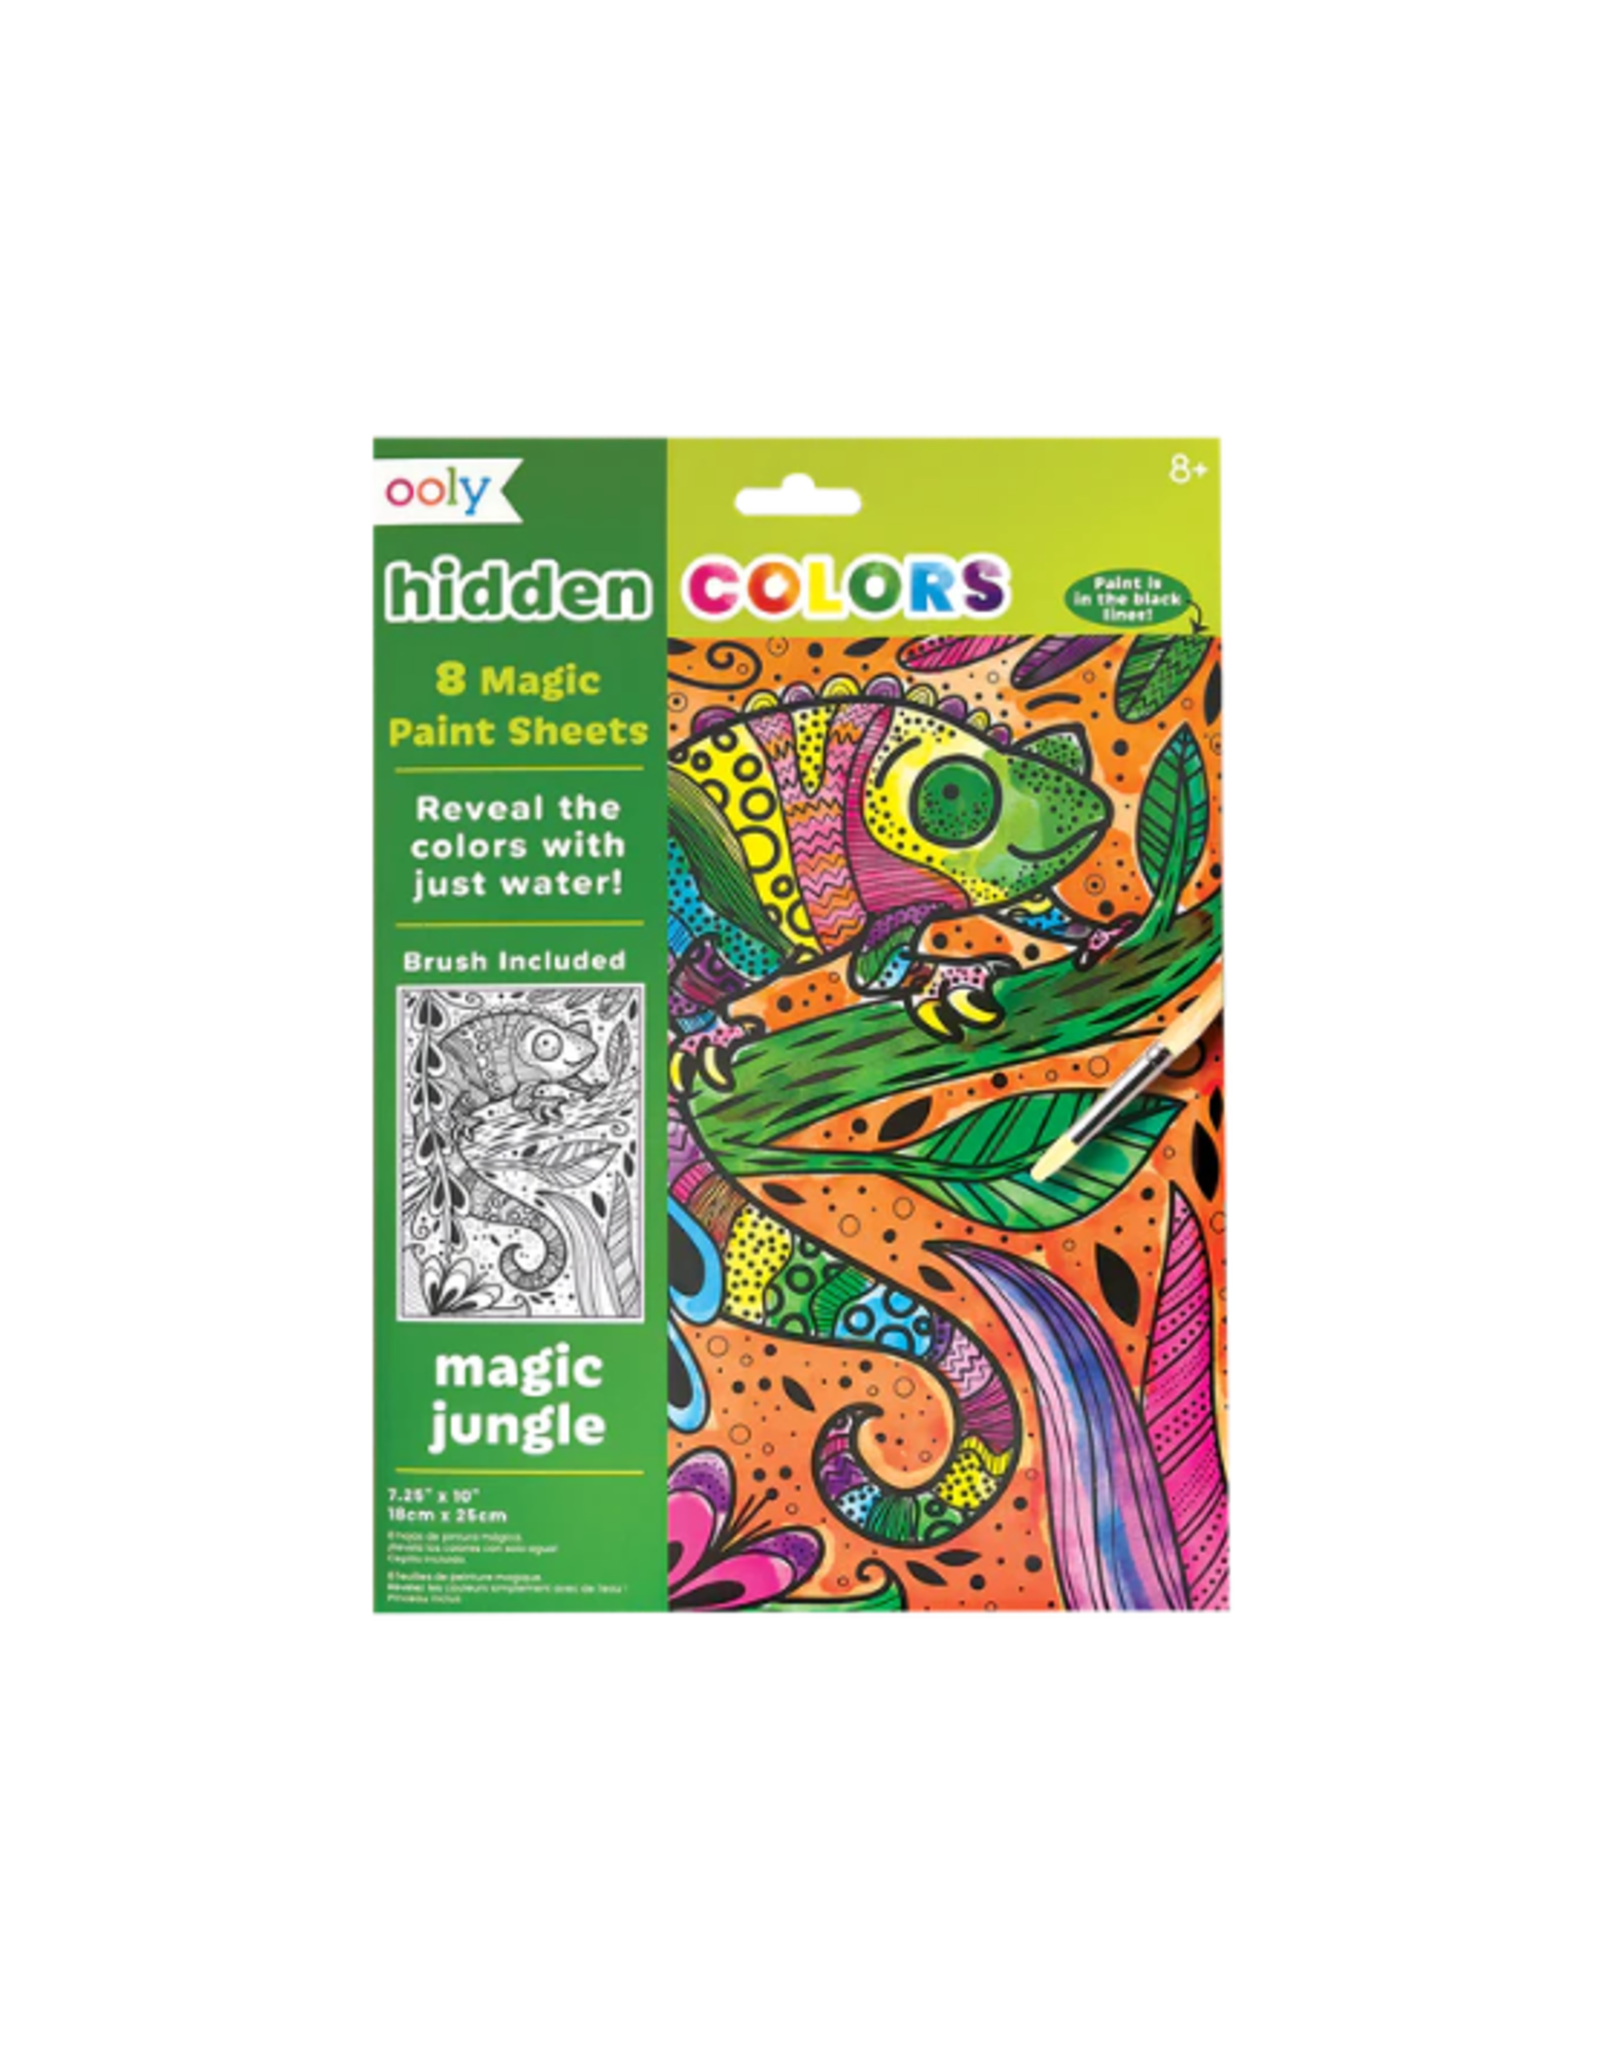 Ooly Ooly - Hidden Colors Magic Paint Sheets - Magic Jungle